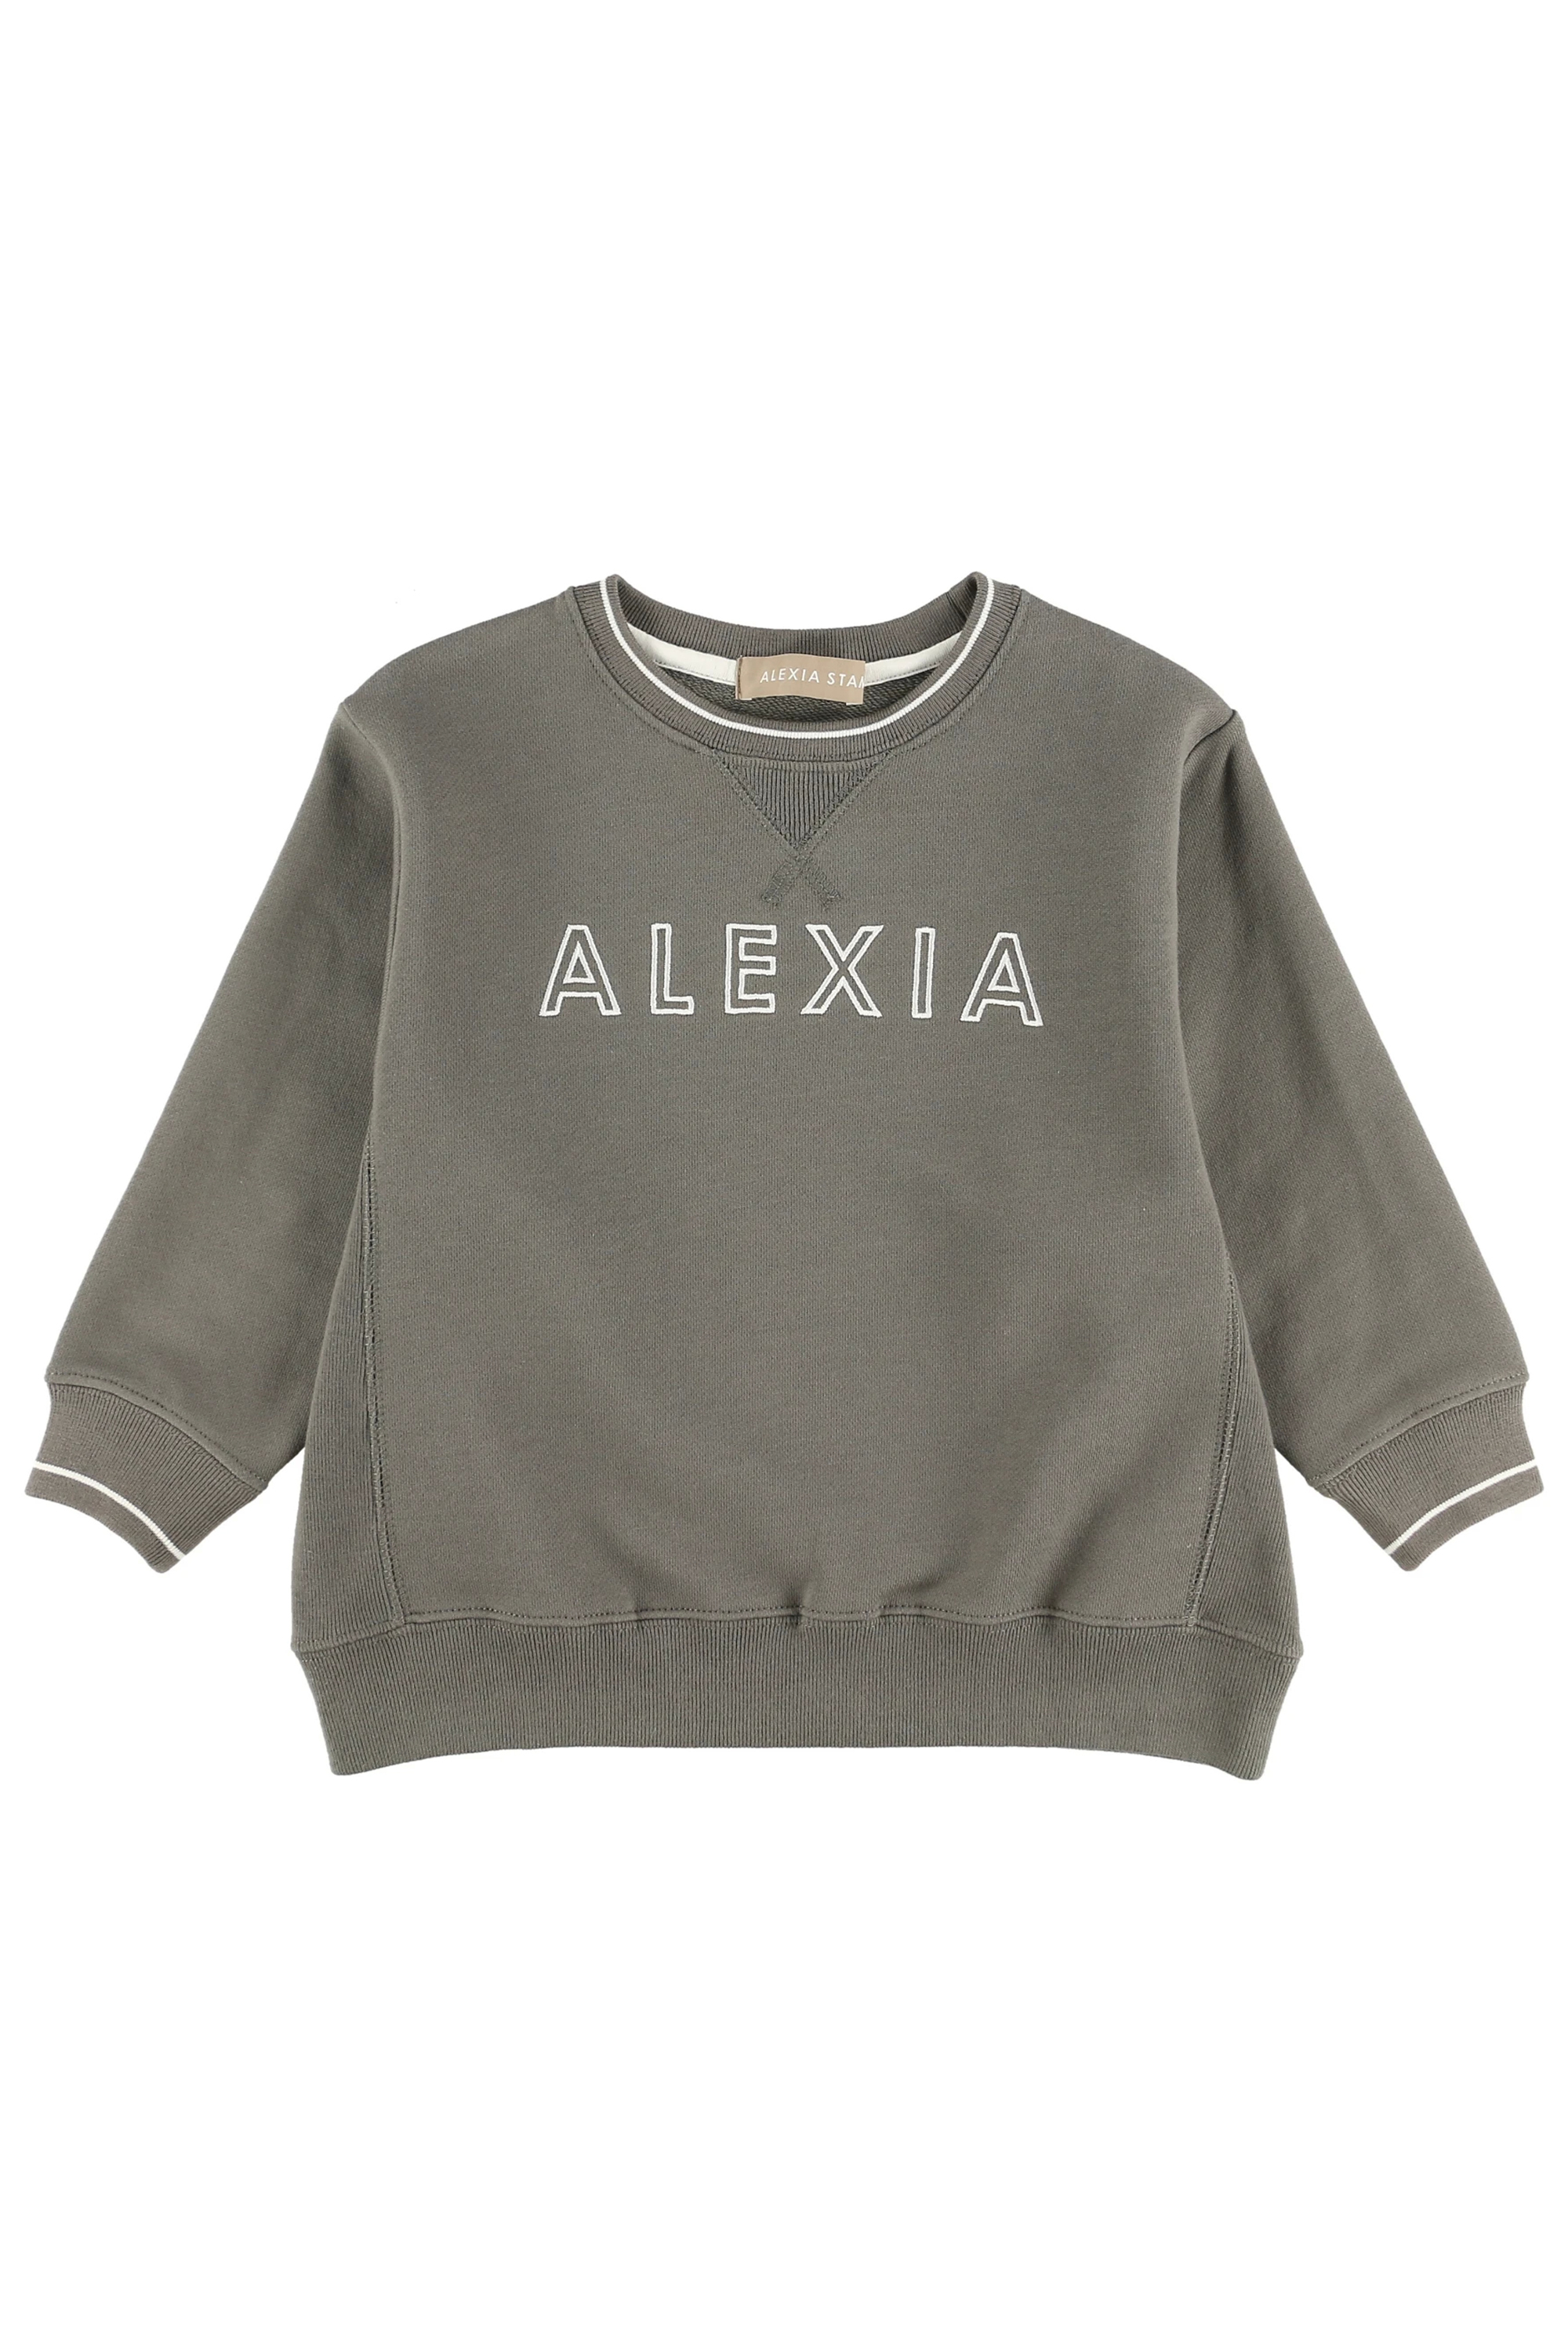 ALEXIA STAM Sweatshirt Charcoal - トレーナー/スウェット